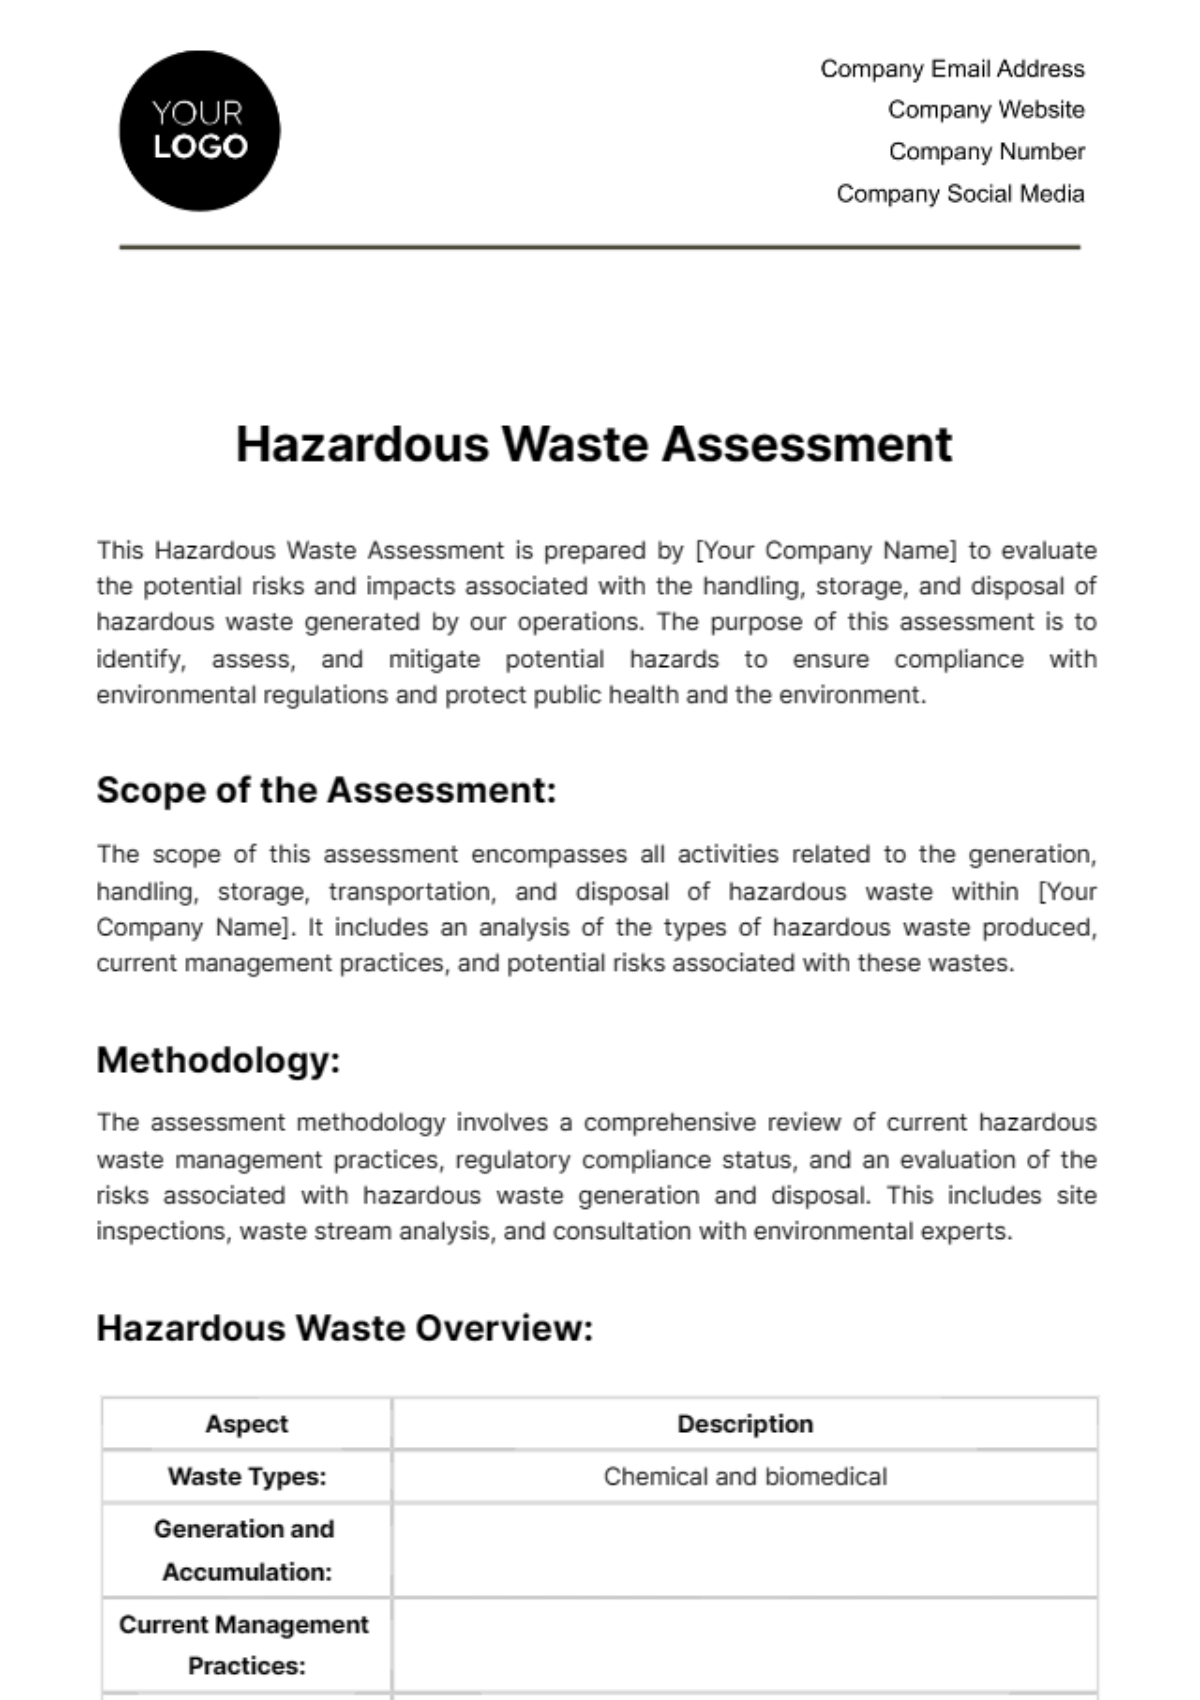 Hazardous Waste Assessment Template